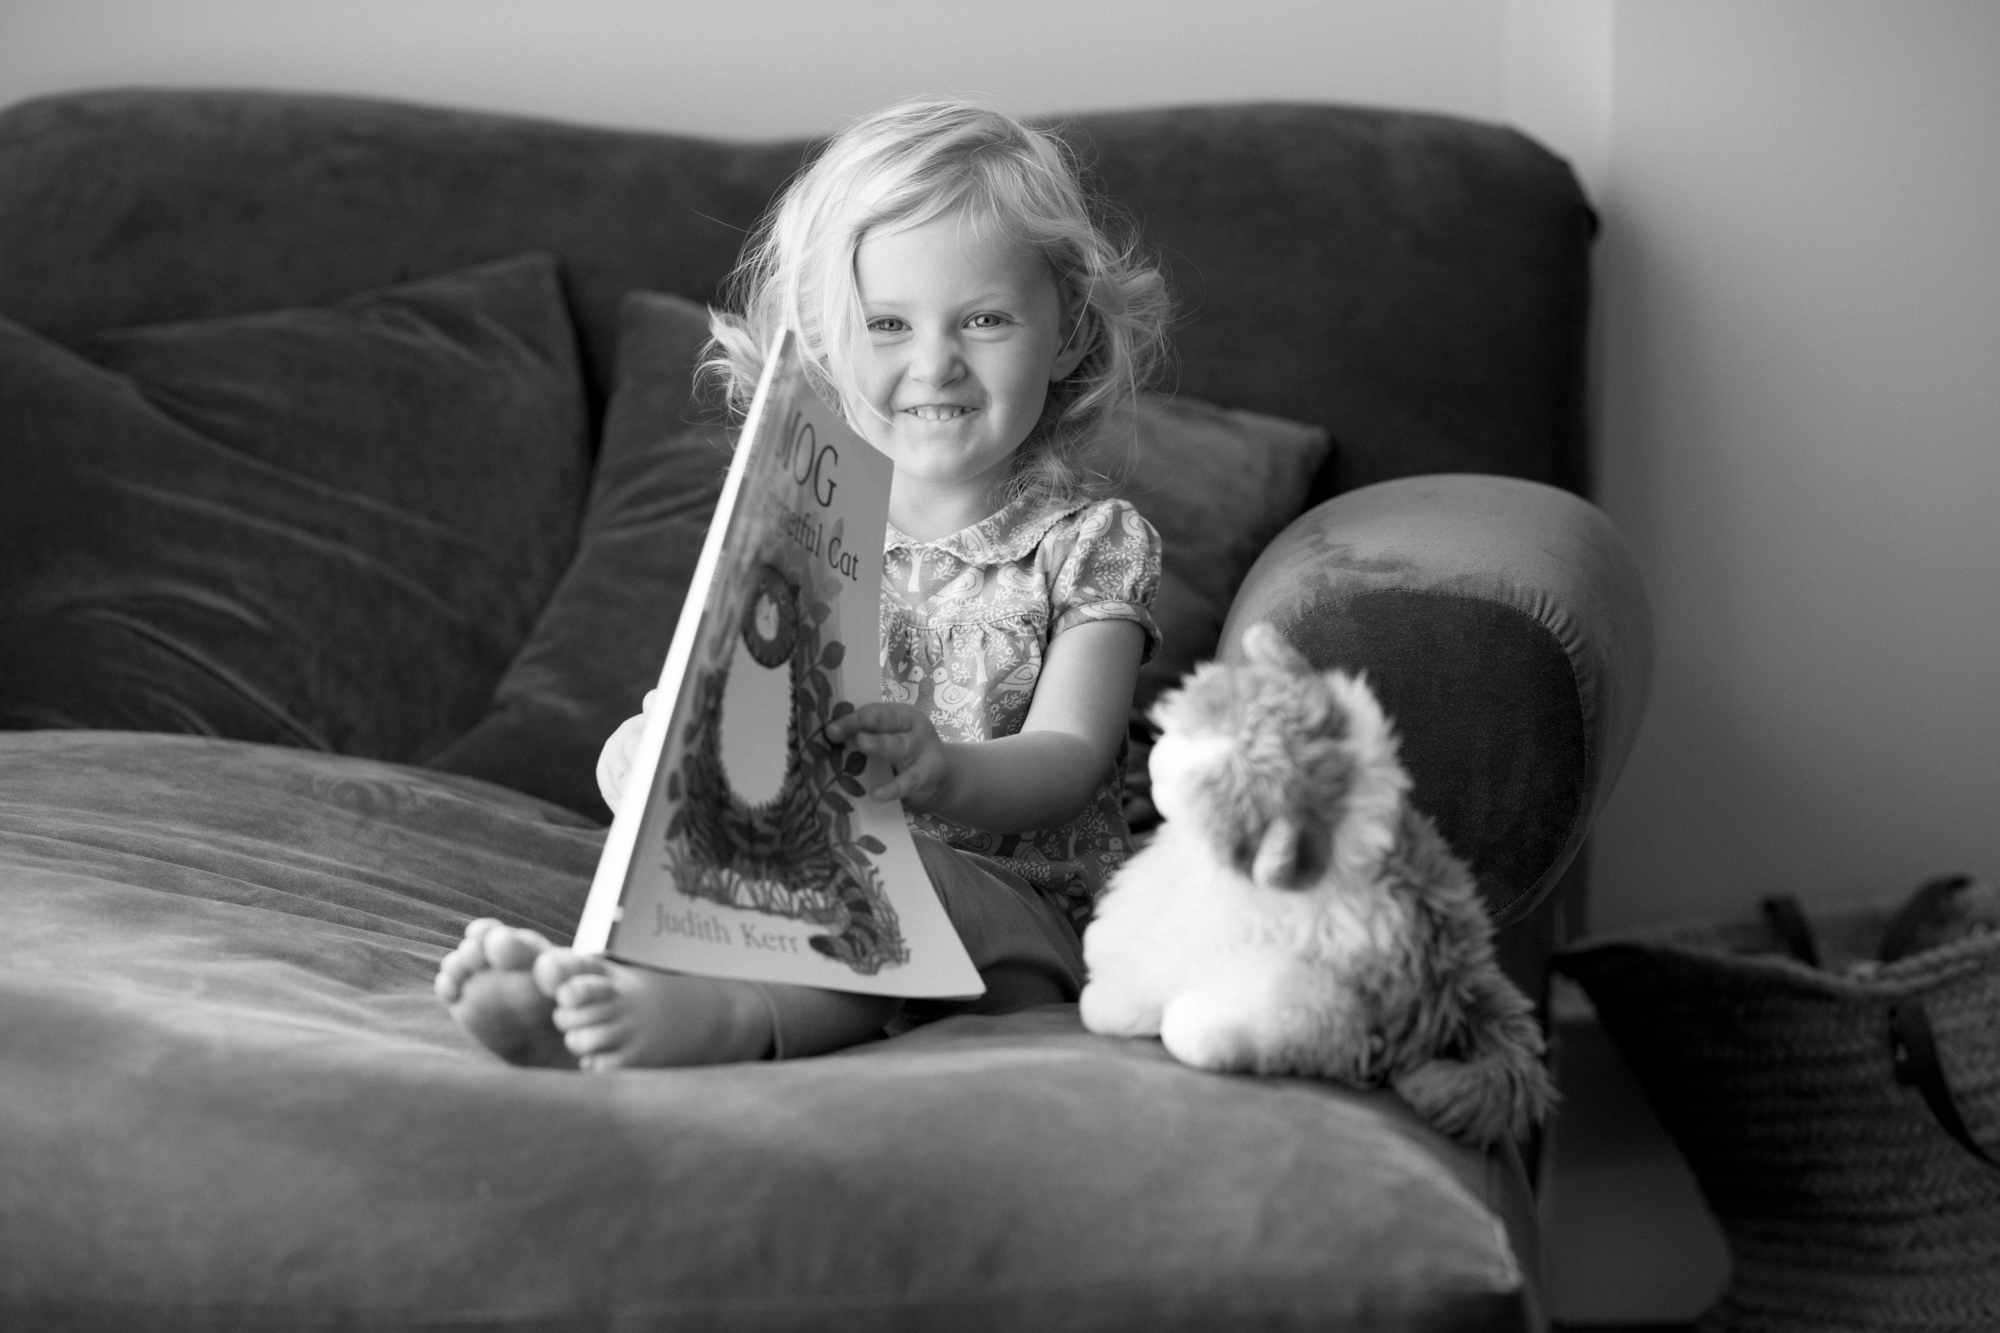 Black and white children's photographer